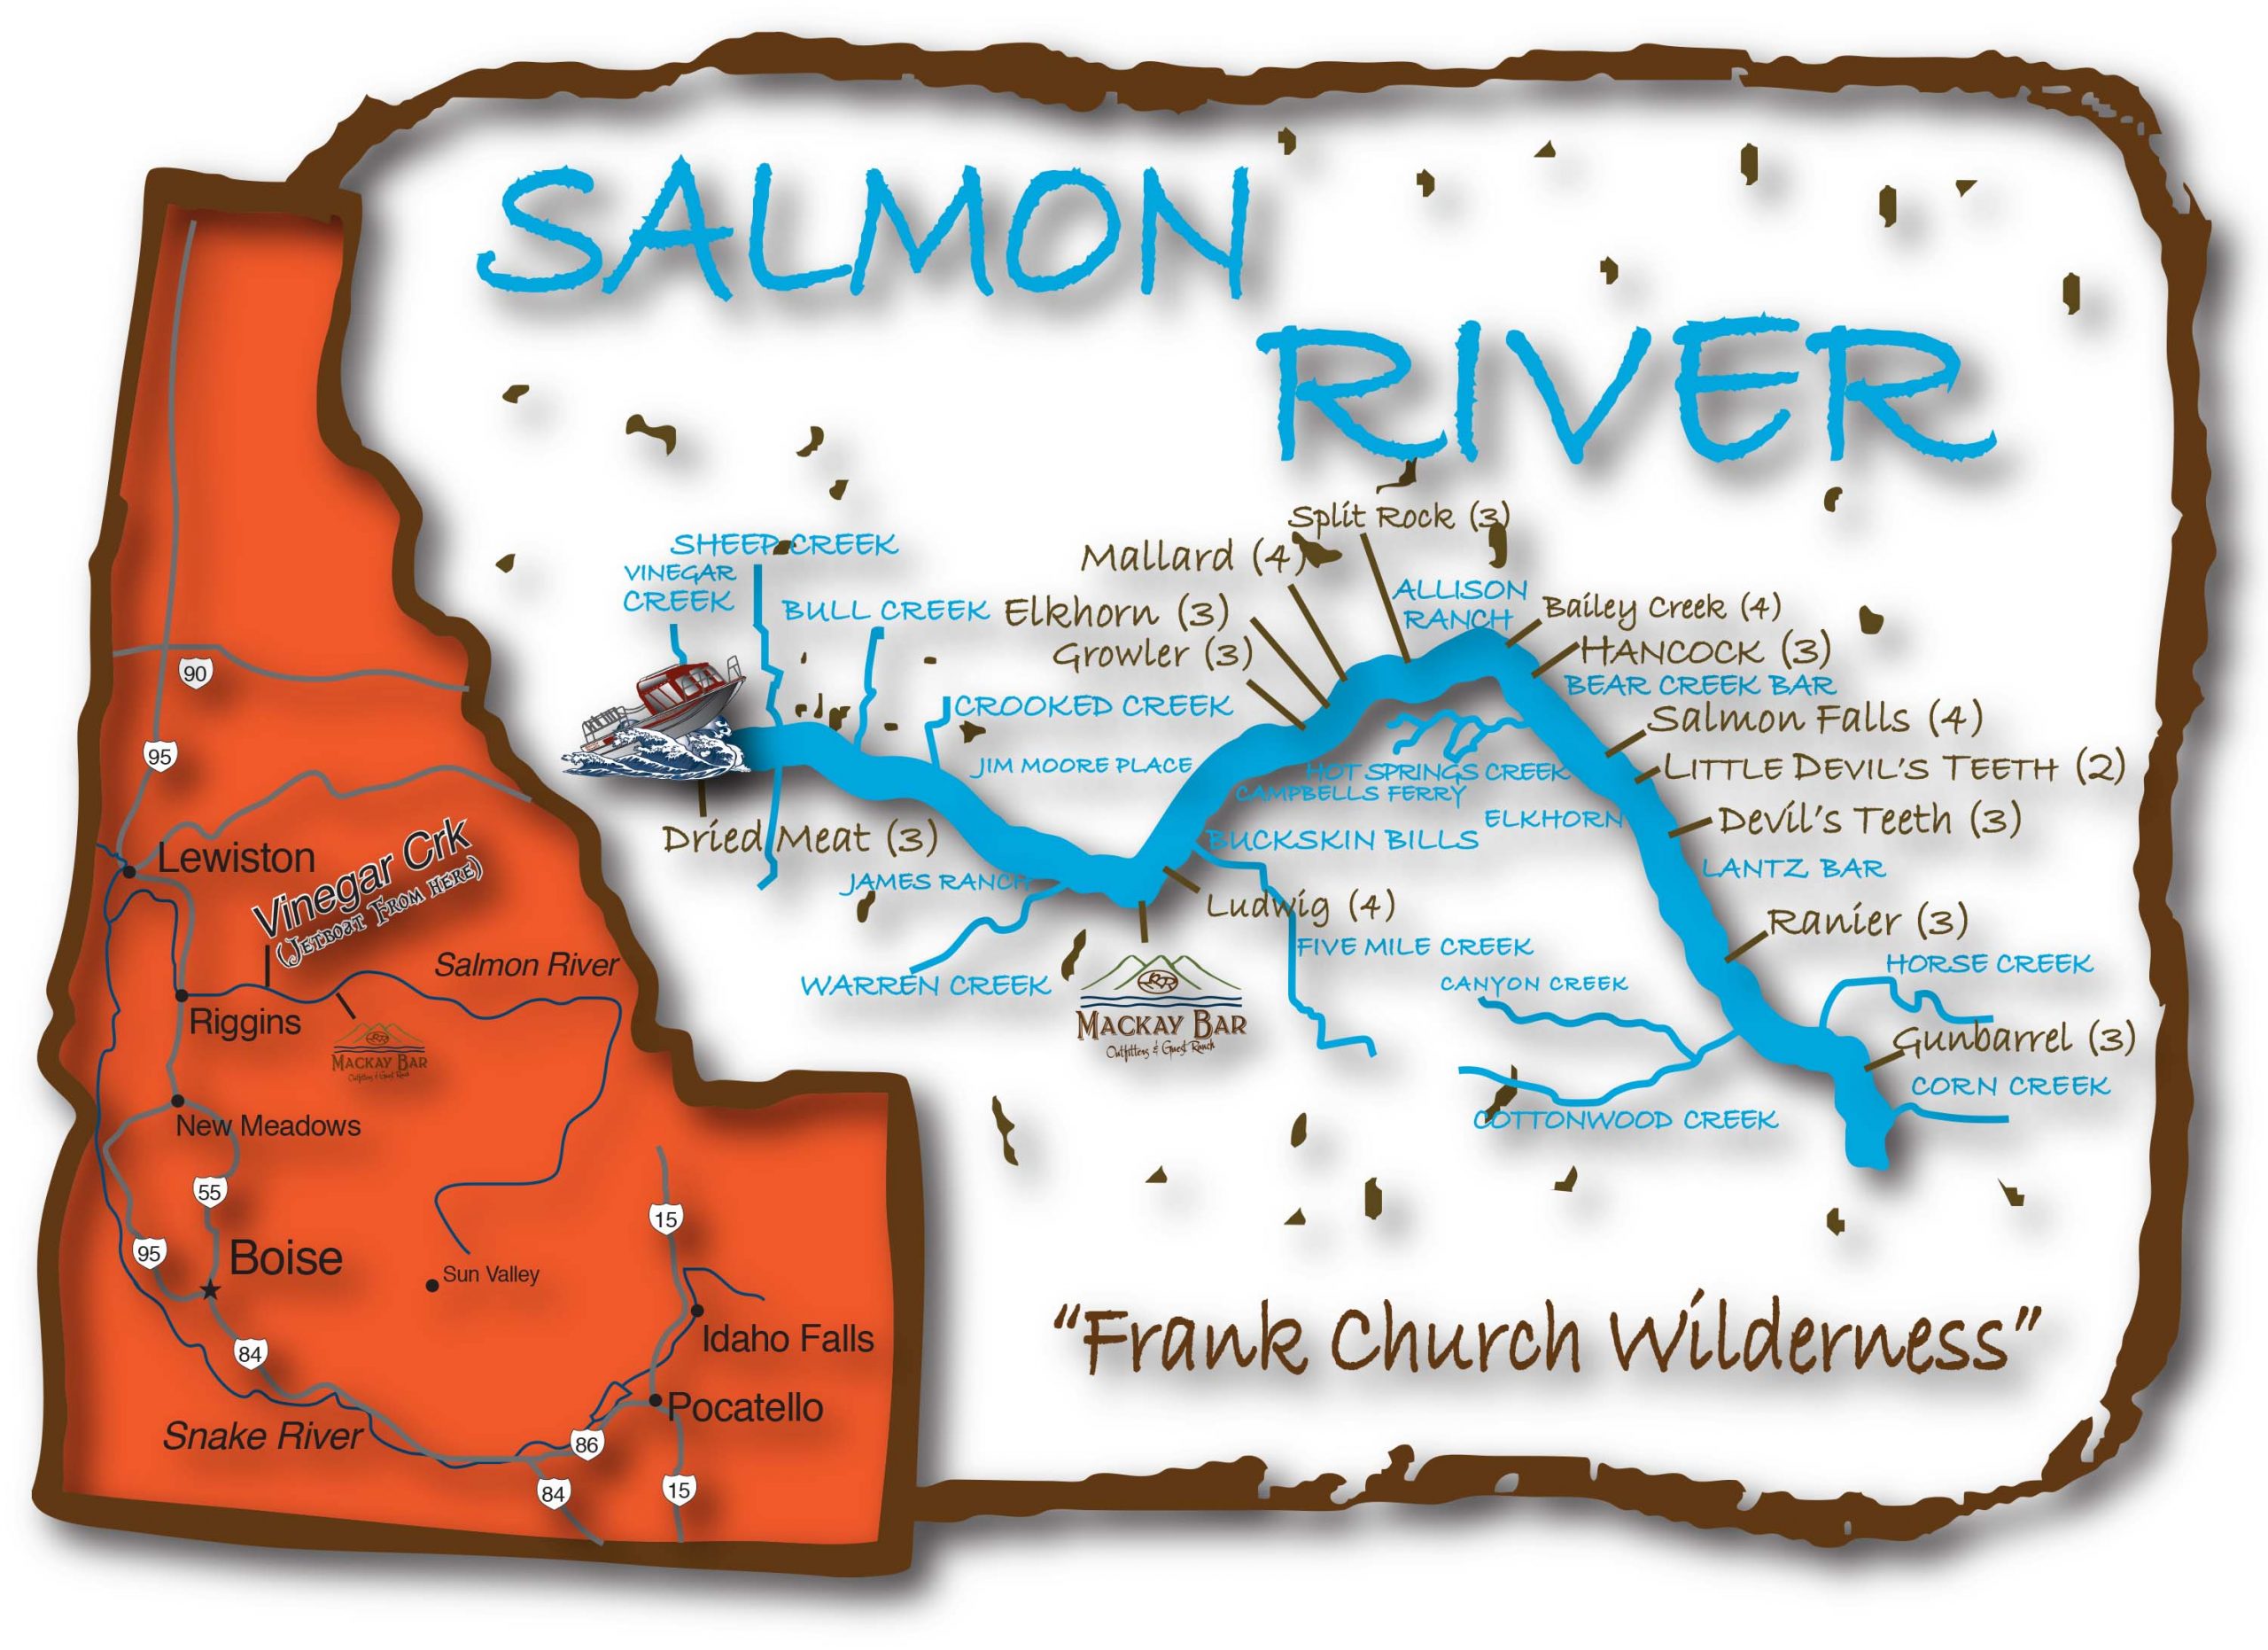 Salmon River Map - Mackay Bar Ranch